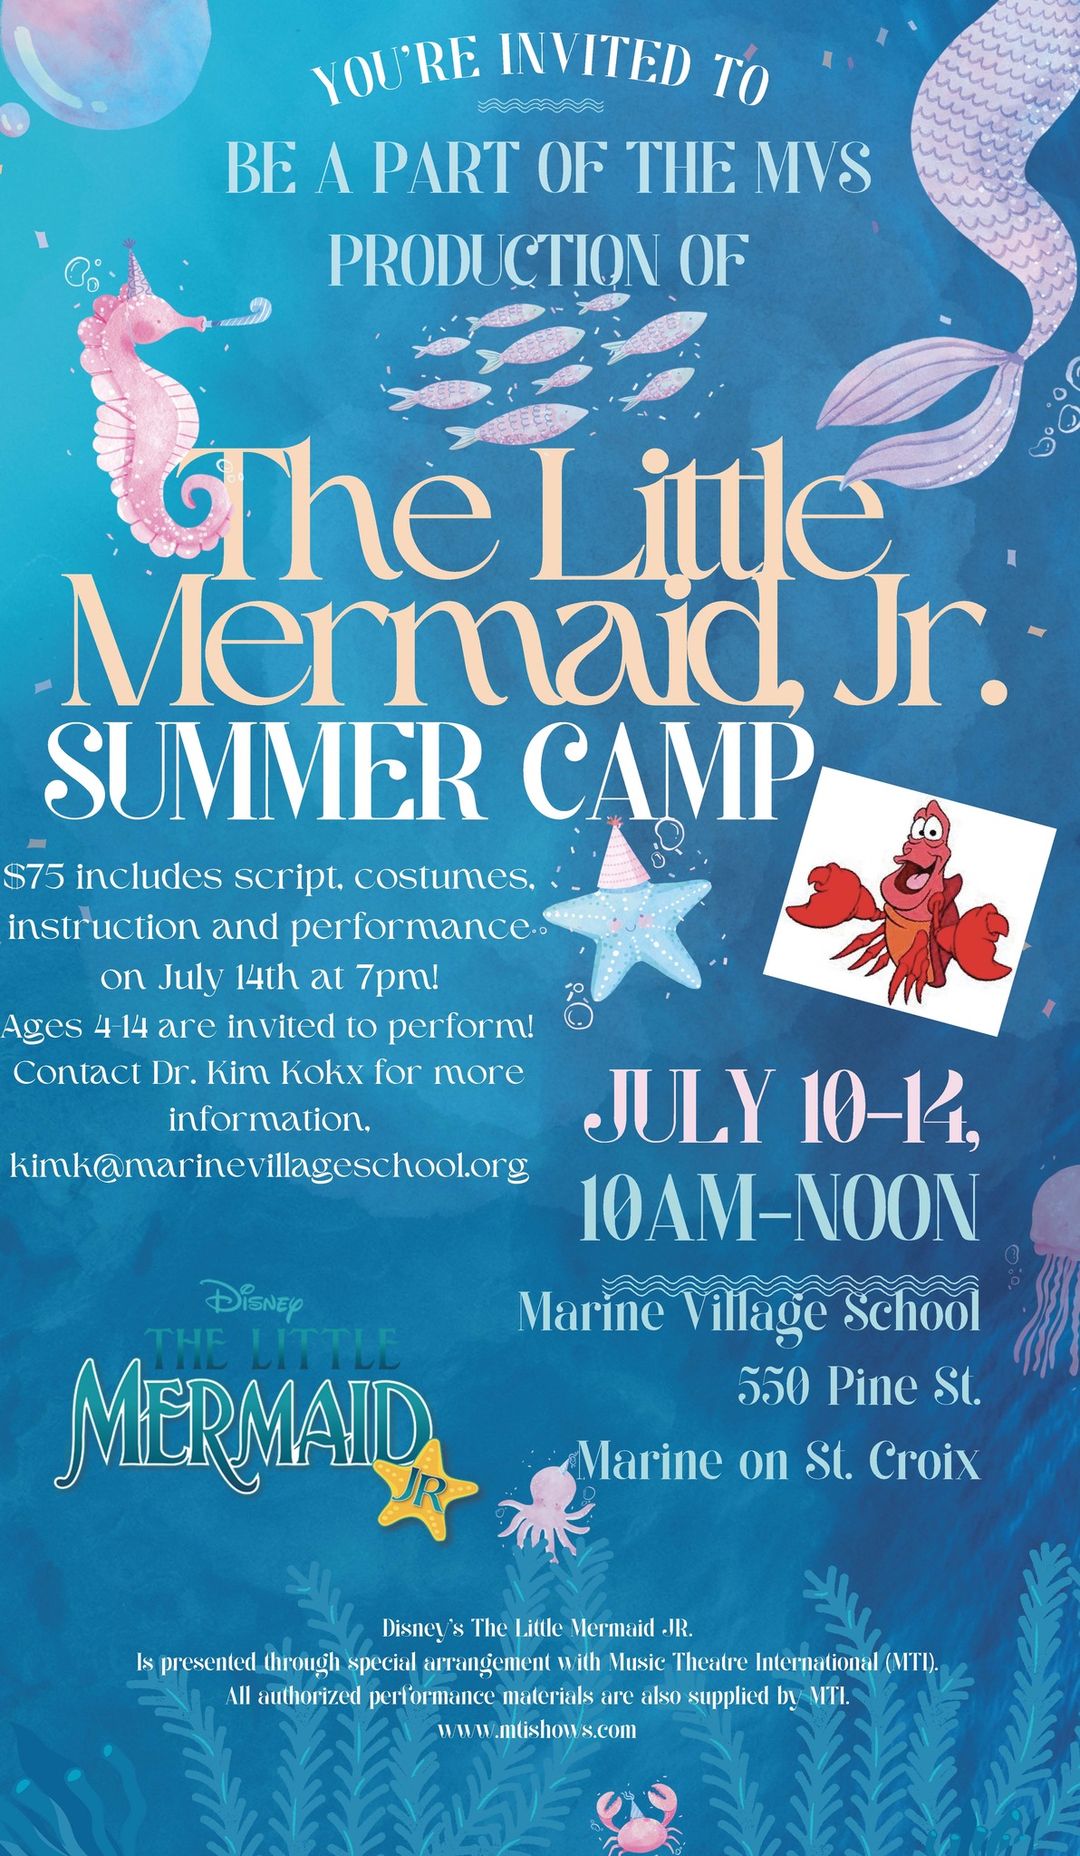 The Little Mermaid Jr. Summer Camp at Marine Village School